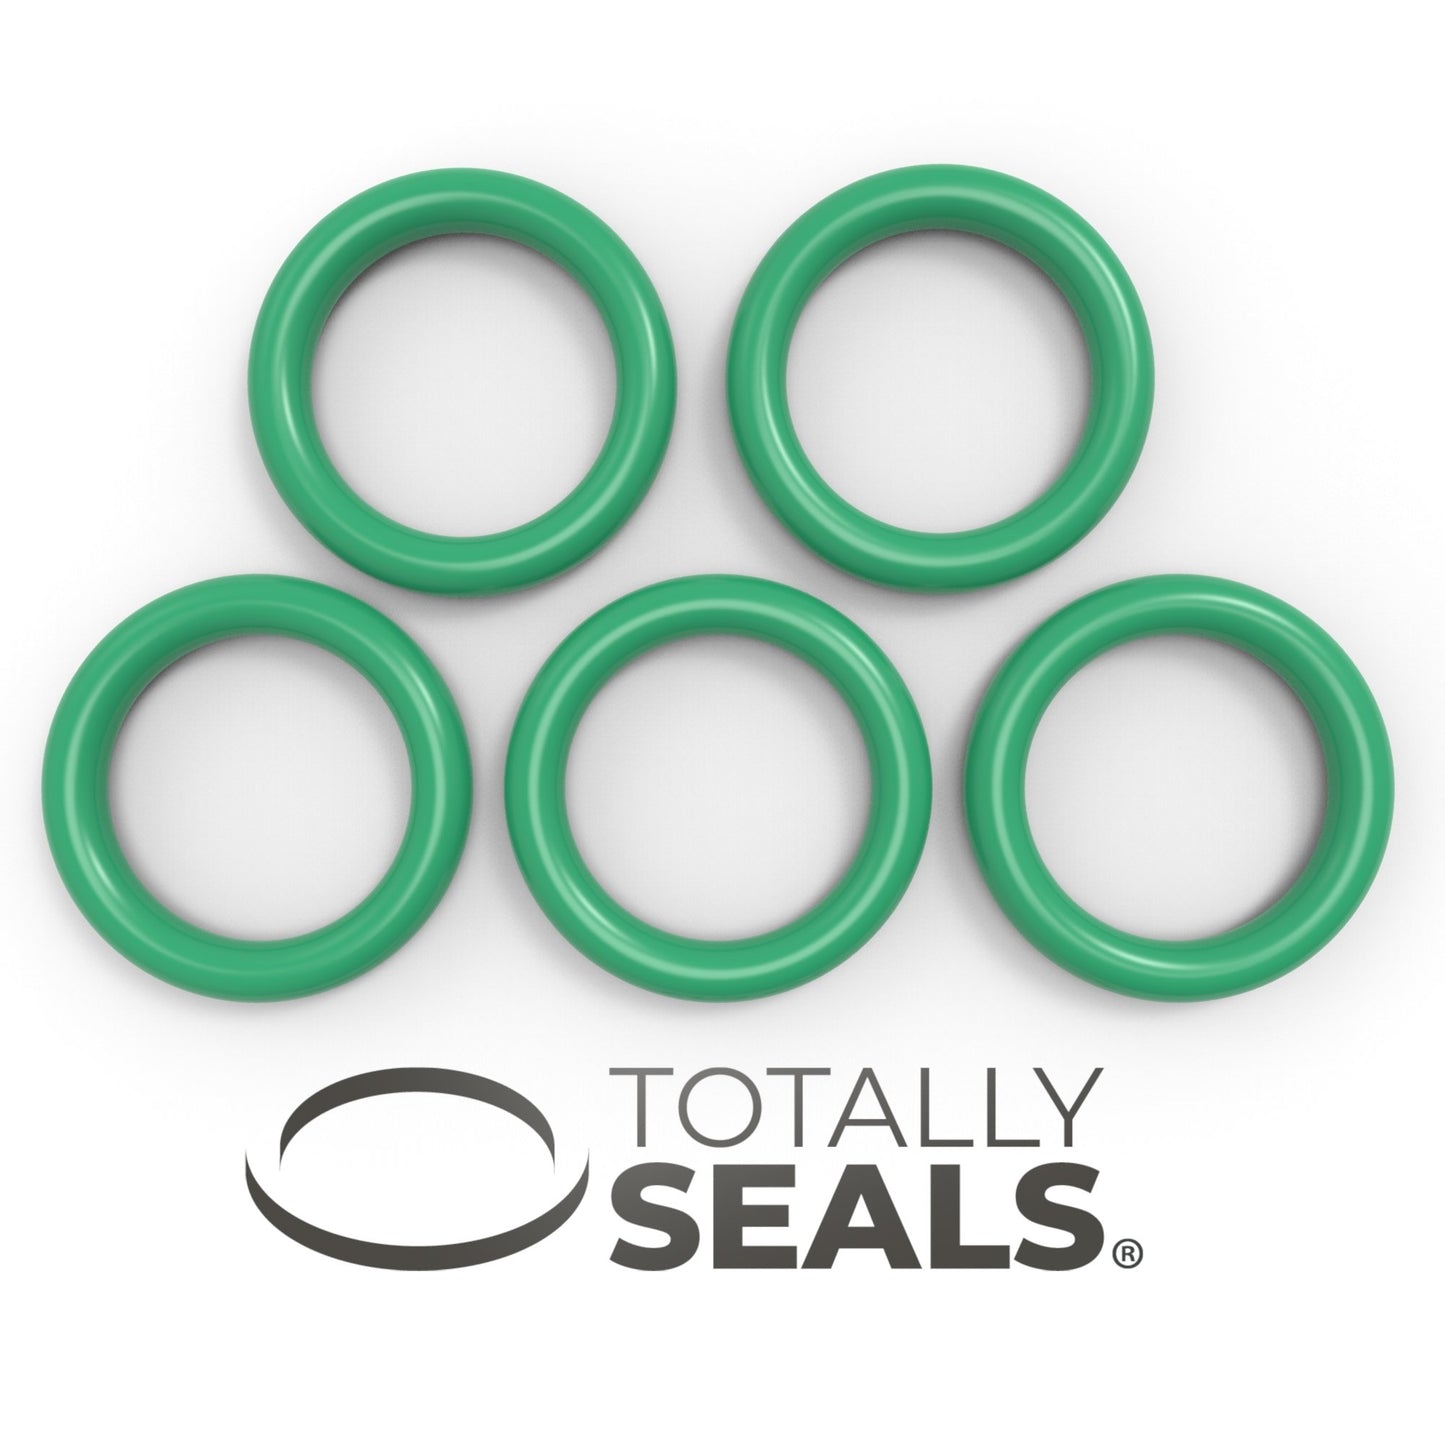 22mm x 3mm (28mm OD) FKM (Viton™) O-Rings - Totally Seals®